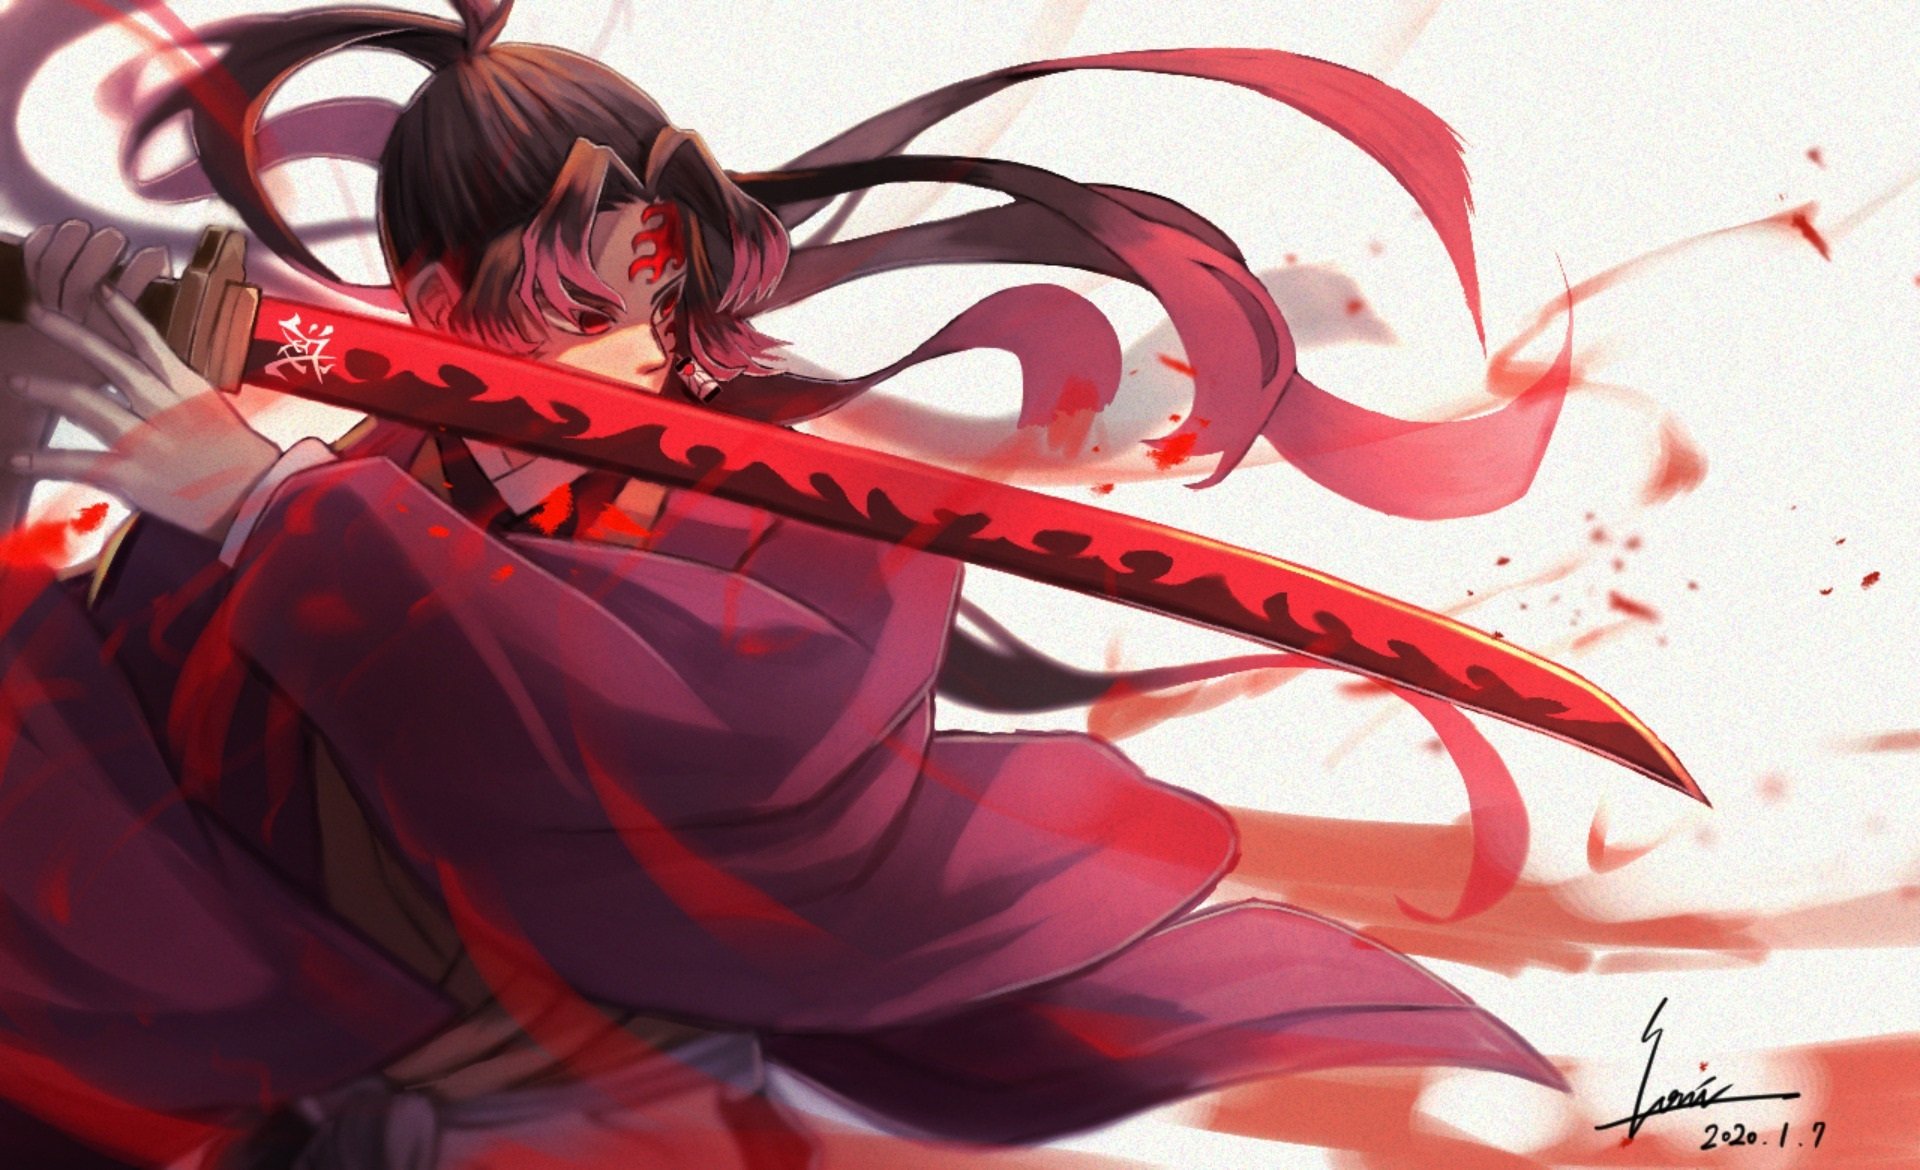 Yoriichi, a character from the Demon slayer series, holding his red Nichirin blade. 